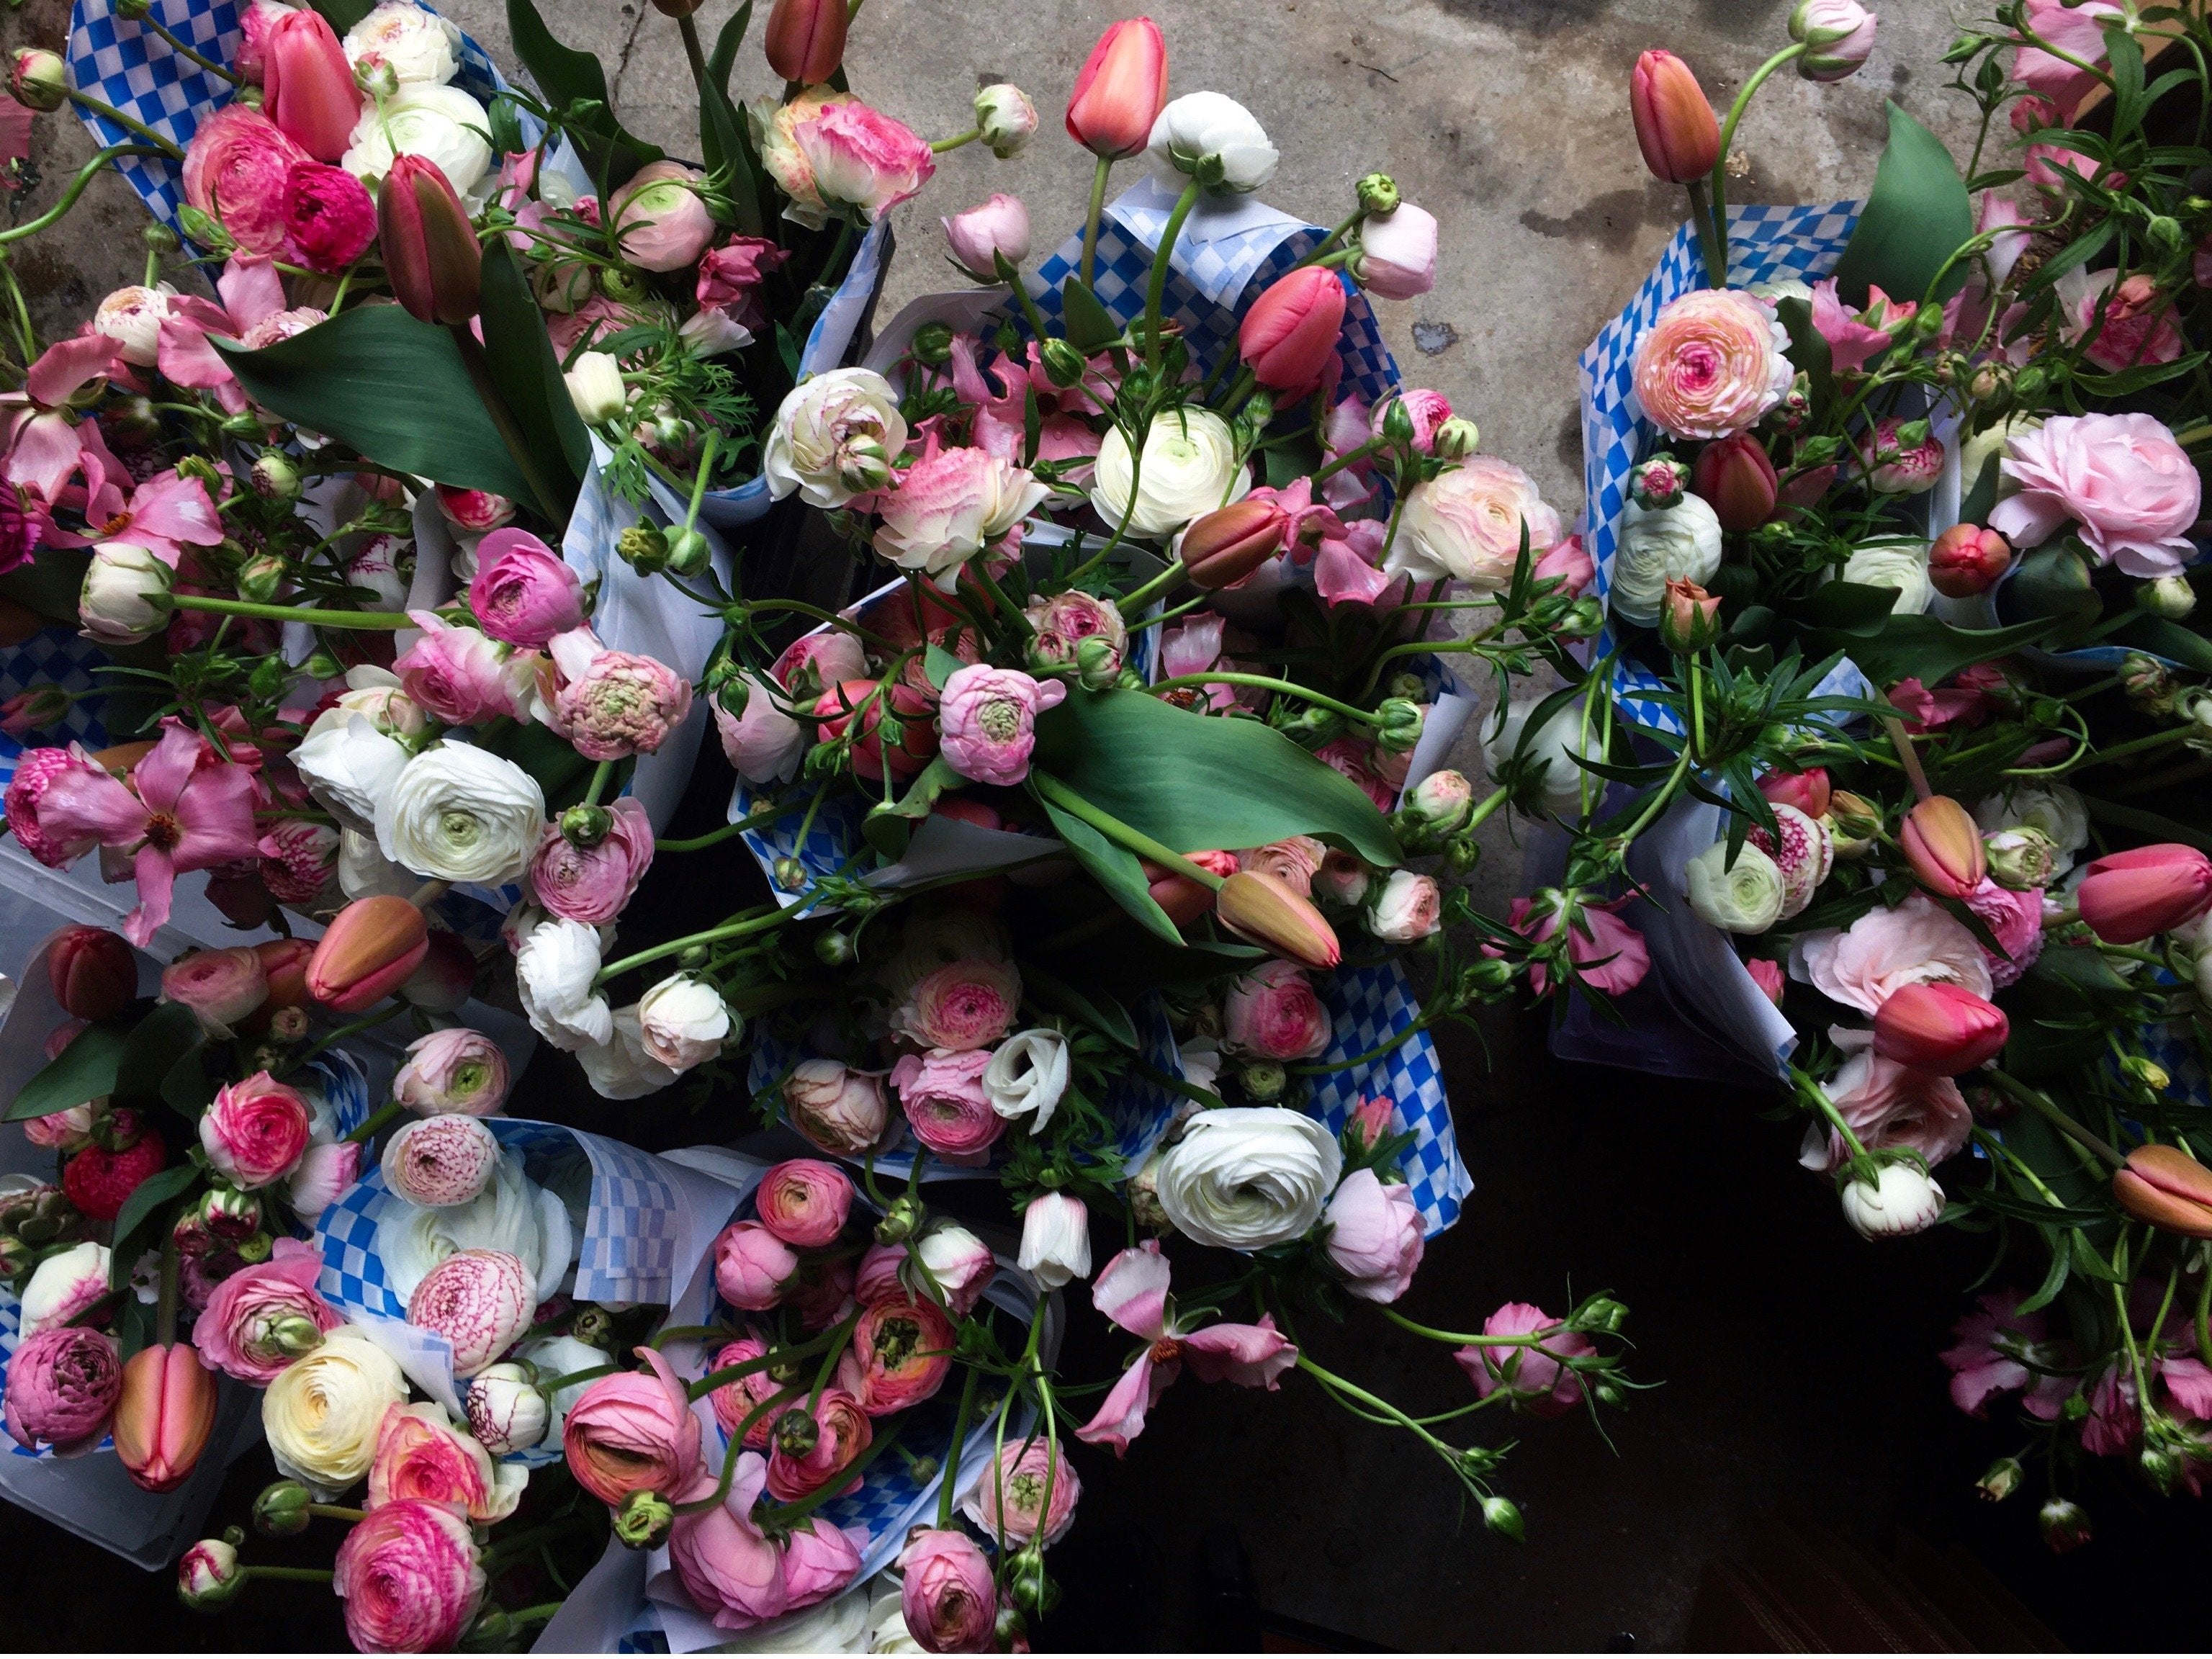 Bulk flowers for weddings. Florists Vancouver WA. Wedding Flowers. Send flowers online.